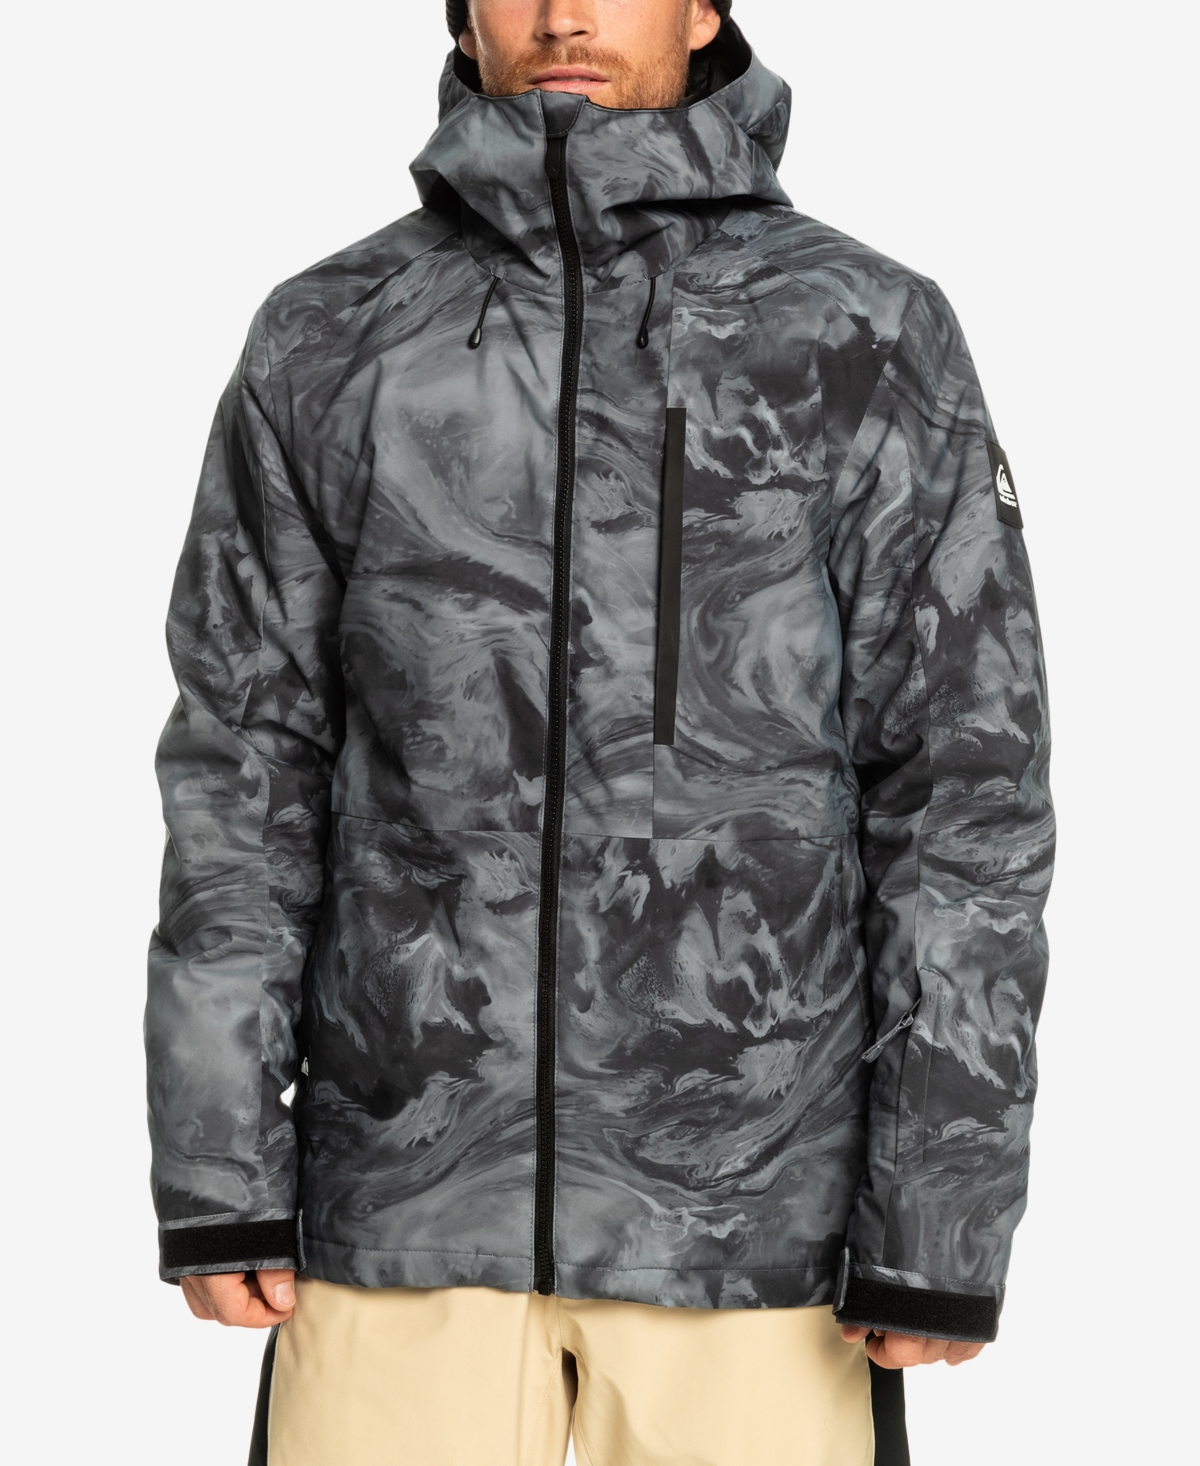 Men's Snow Mission Printed Jacket - Resin Tint True Black